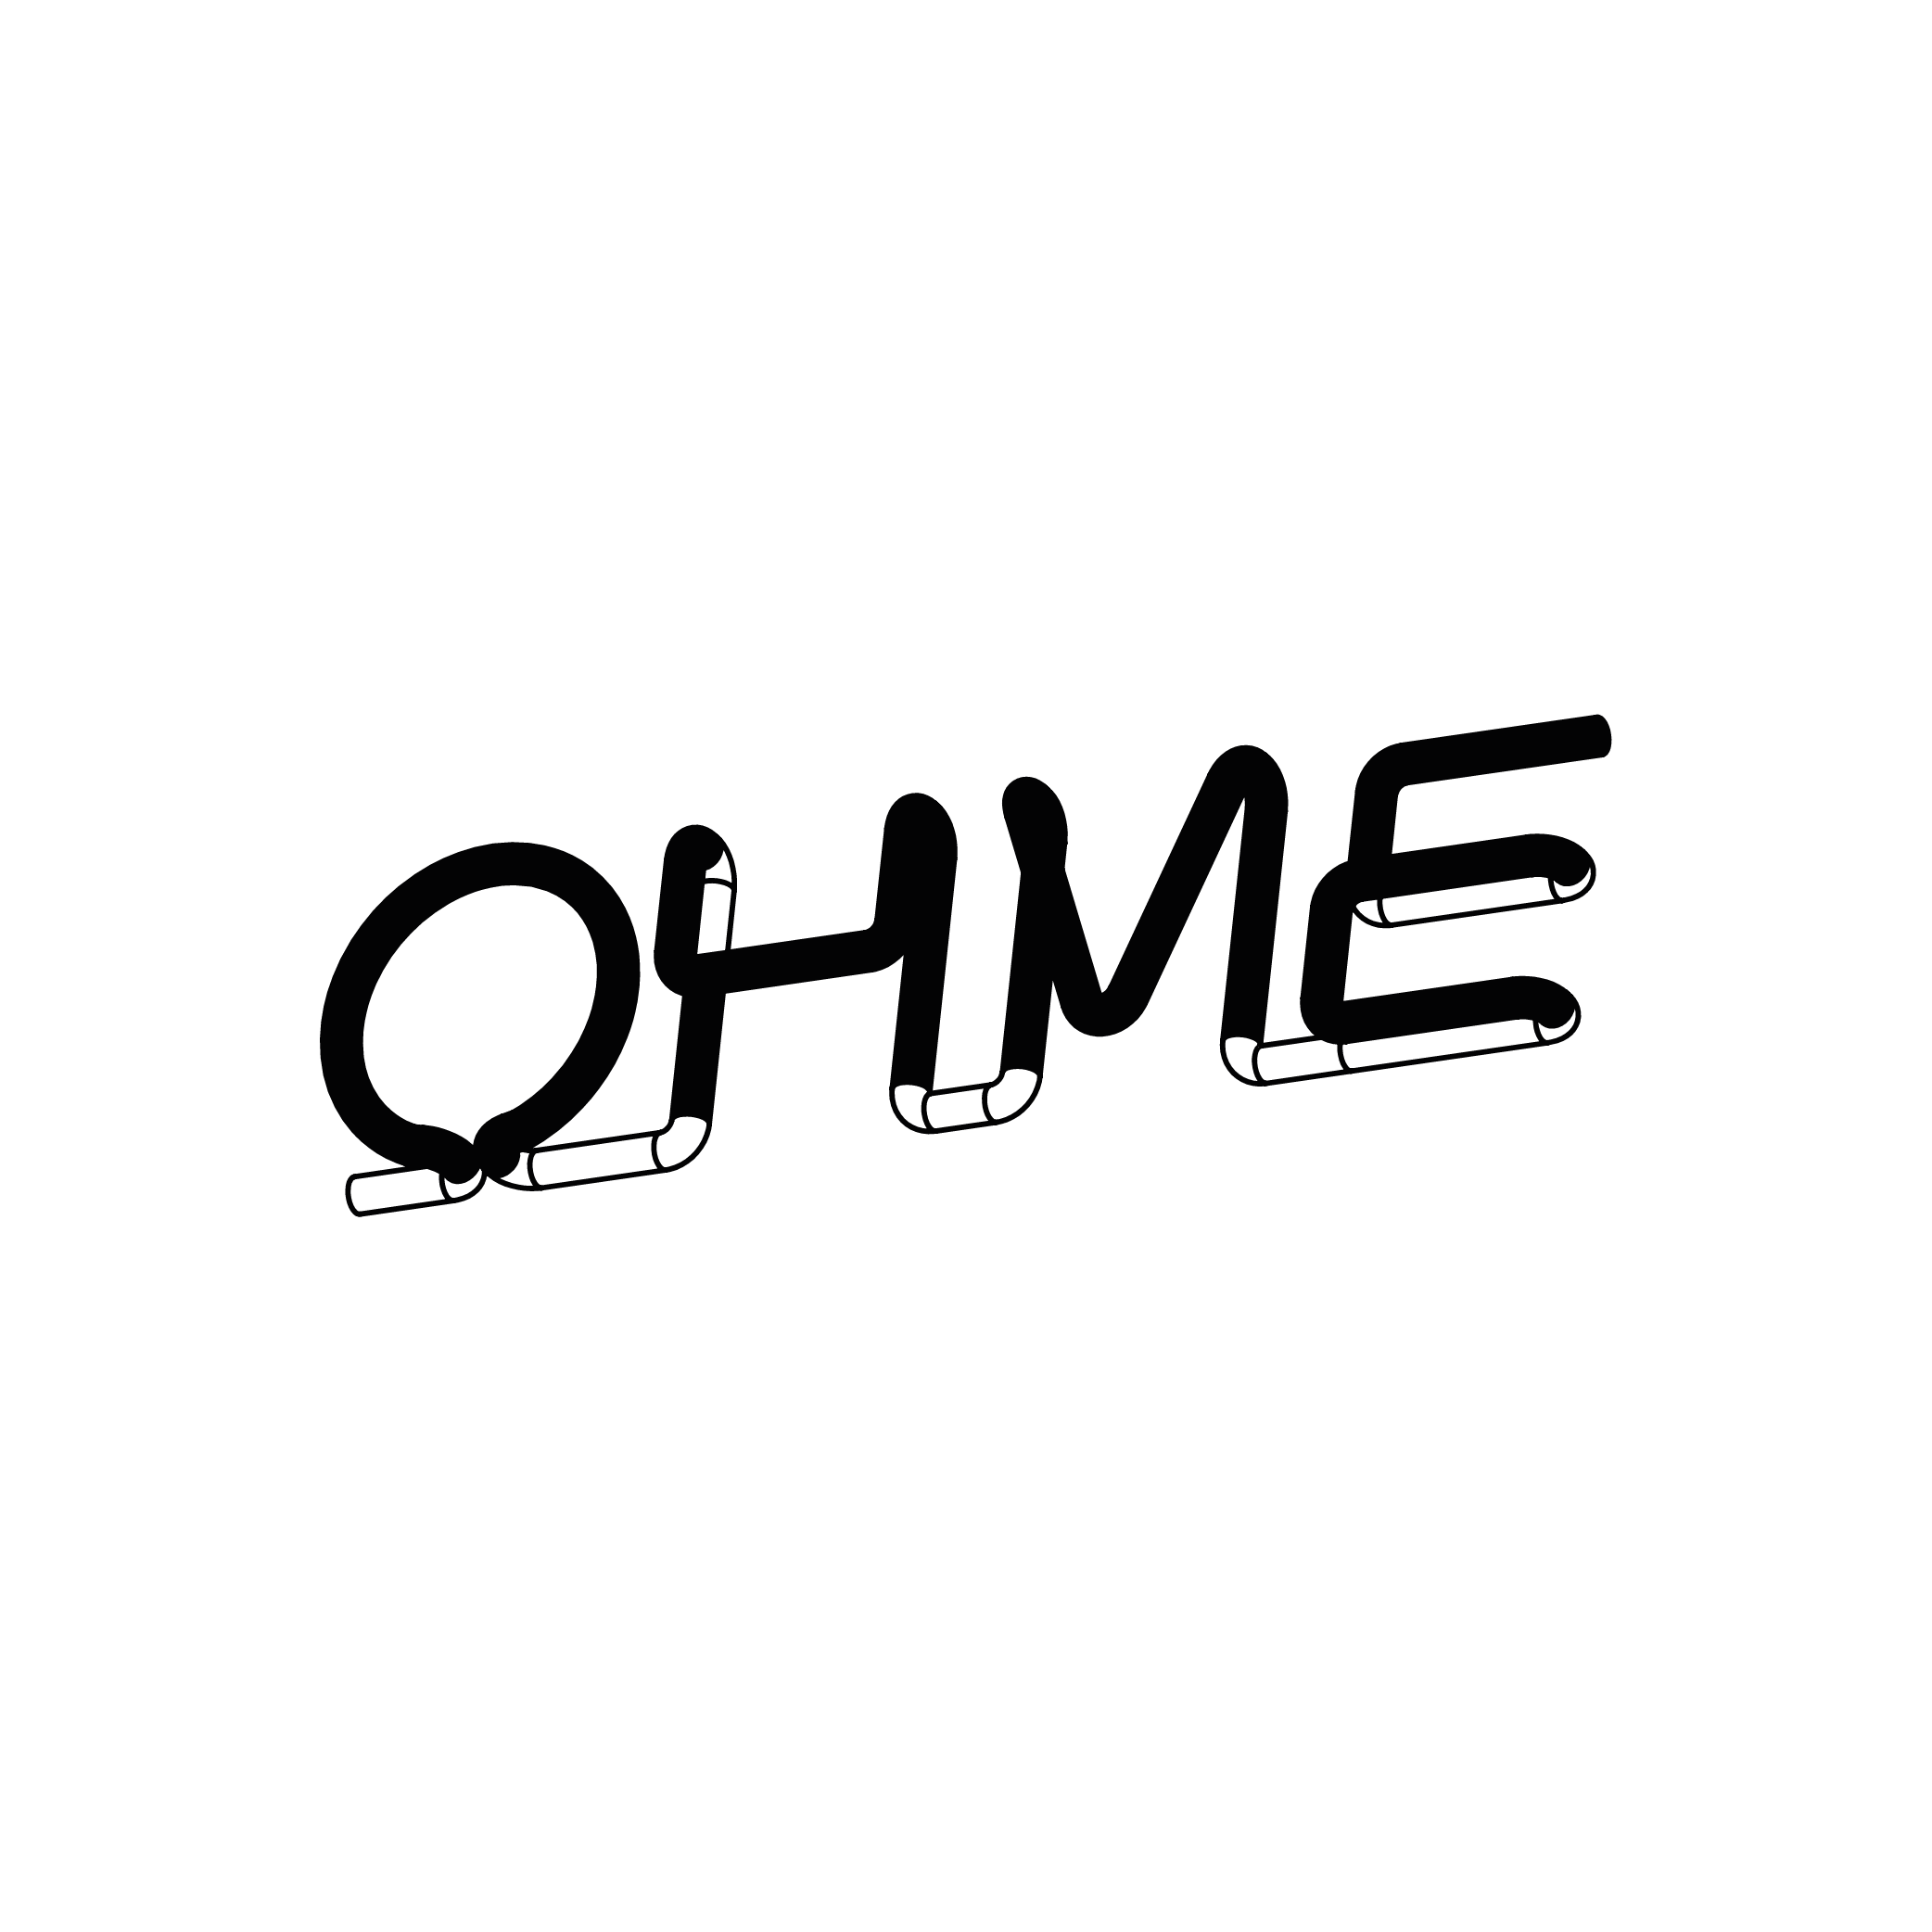 Ohme Logo